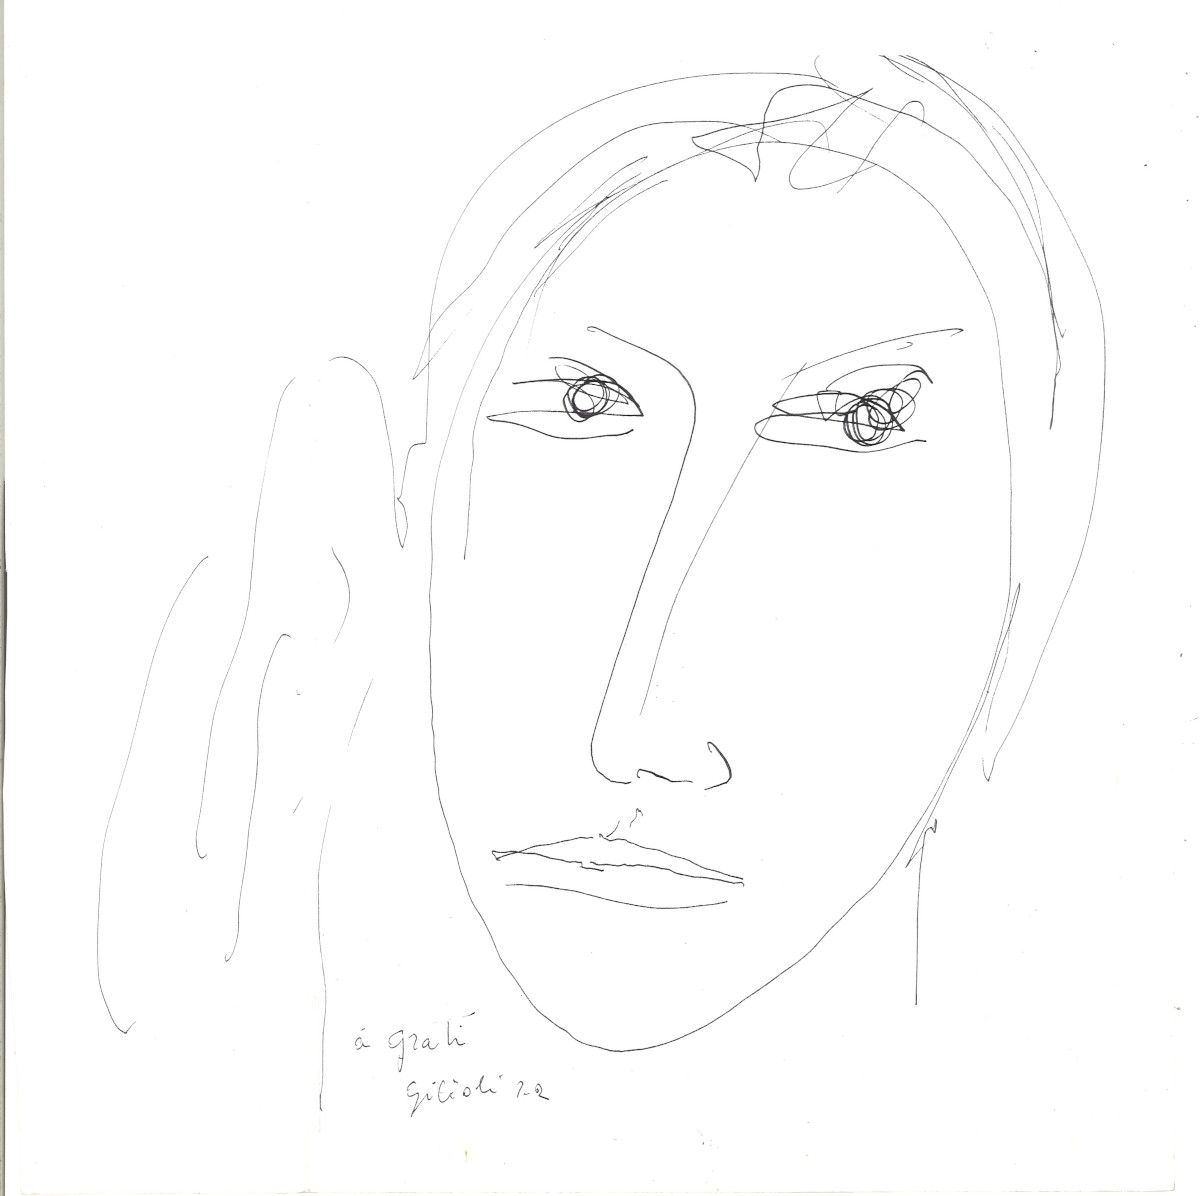 Emile GILIOLI 埃米尔-吉利奥利 (1911 -1977)

一个女人的脸

纸上水墨画

签名，日期为1972年，并献上

 

 尺寸：30 x&hellip;